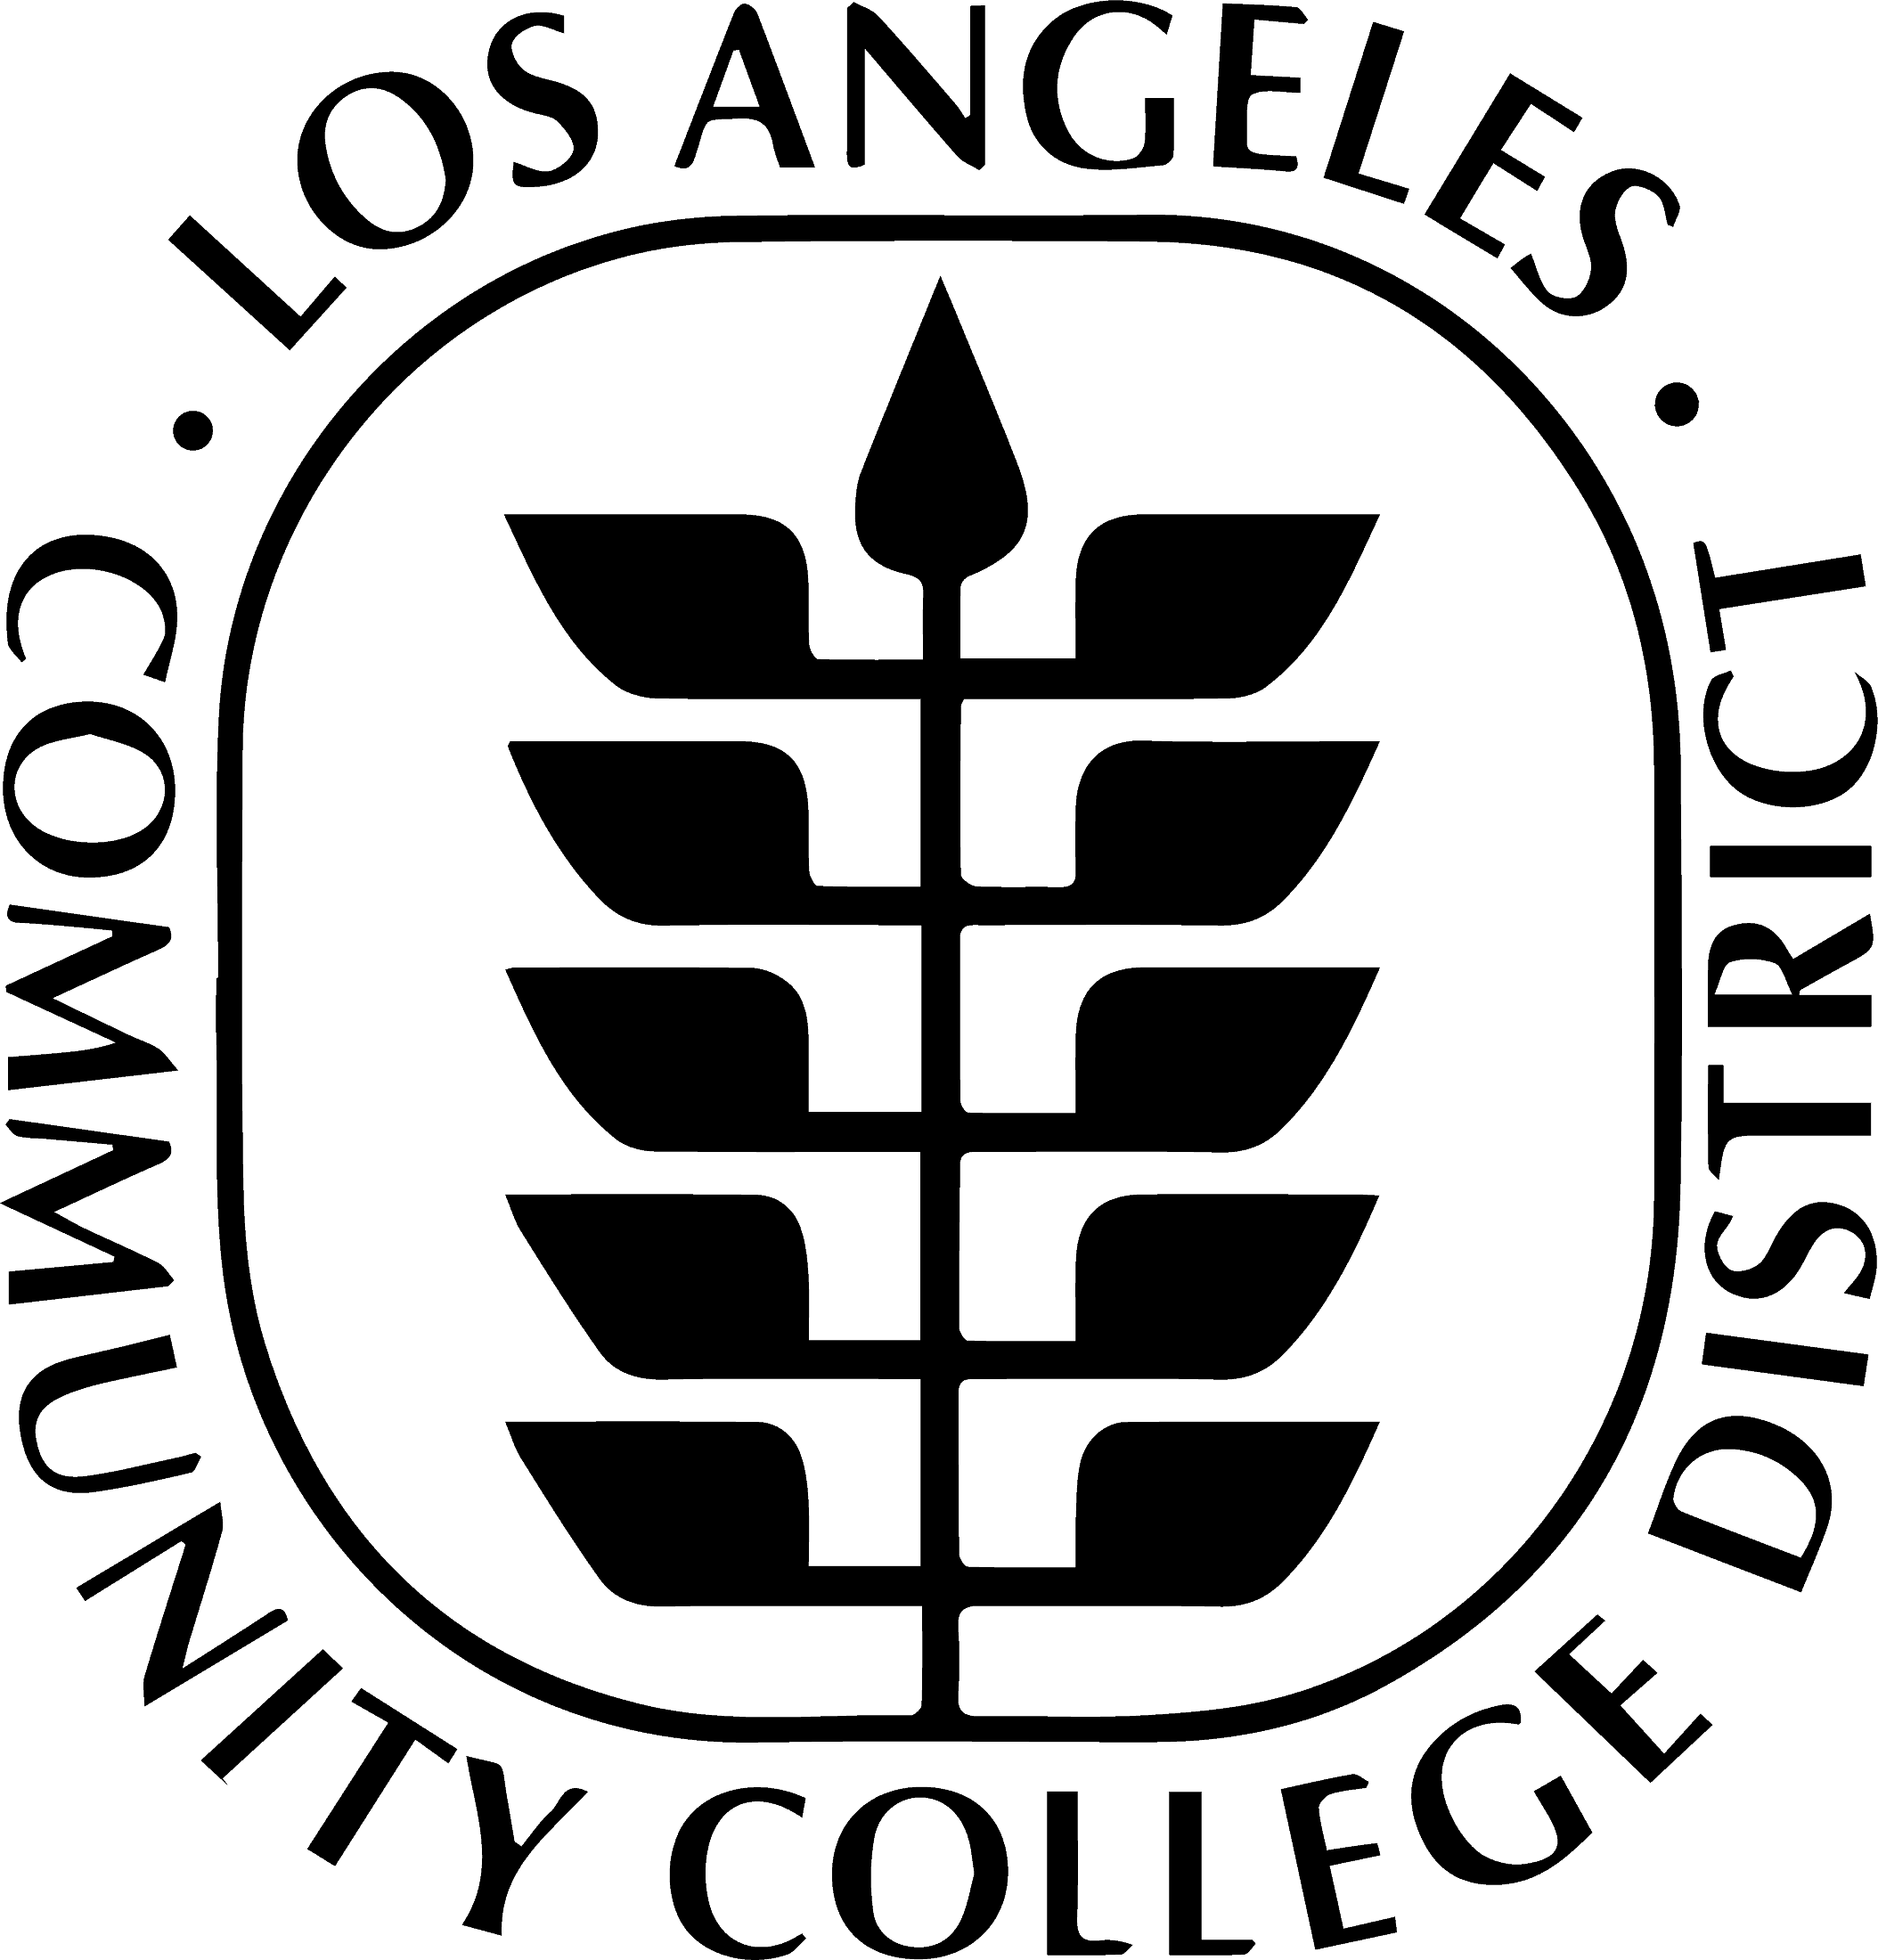 Los Angeles Community College District logo in black